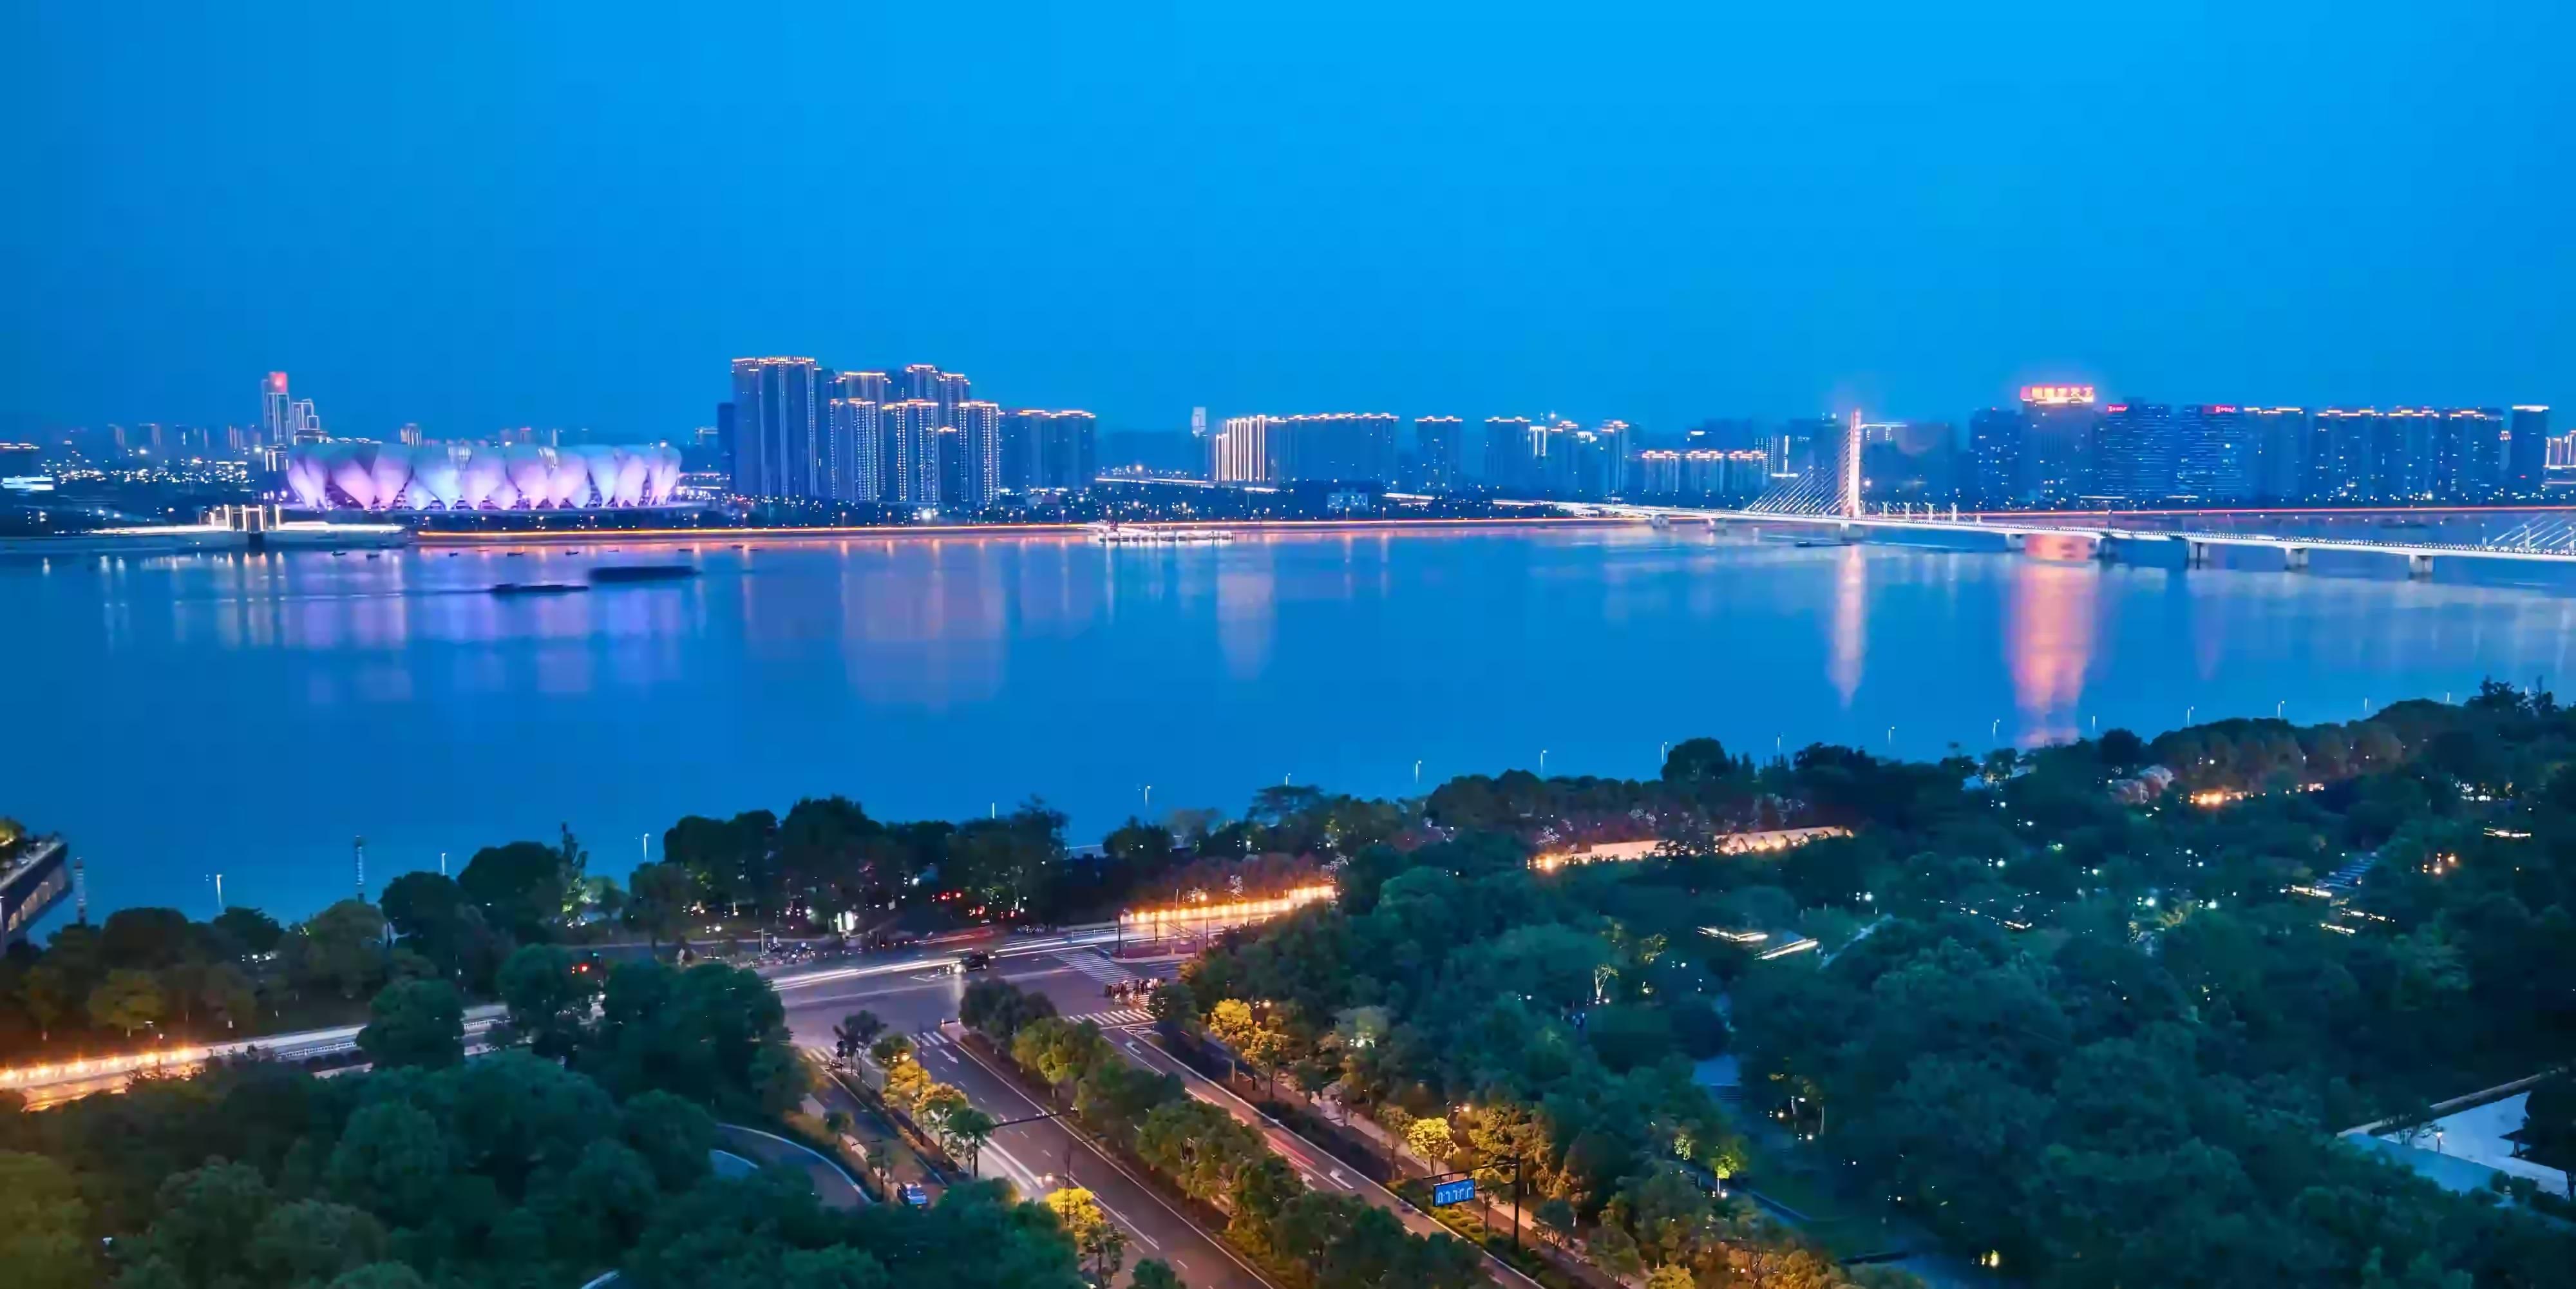 InterContinental Hangzhou Hotel View